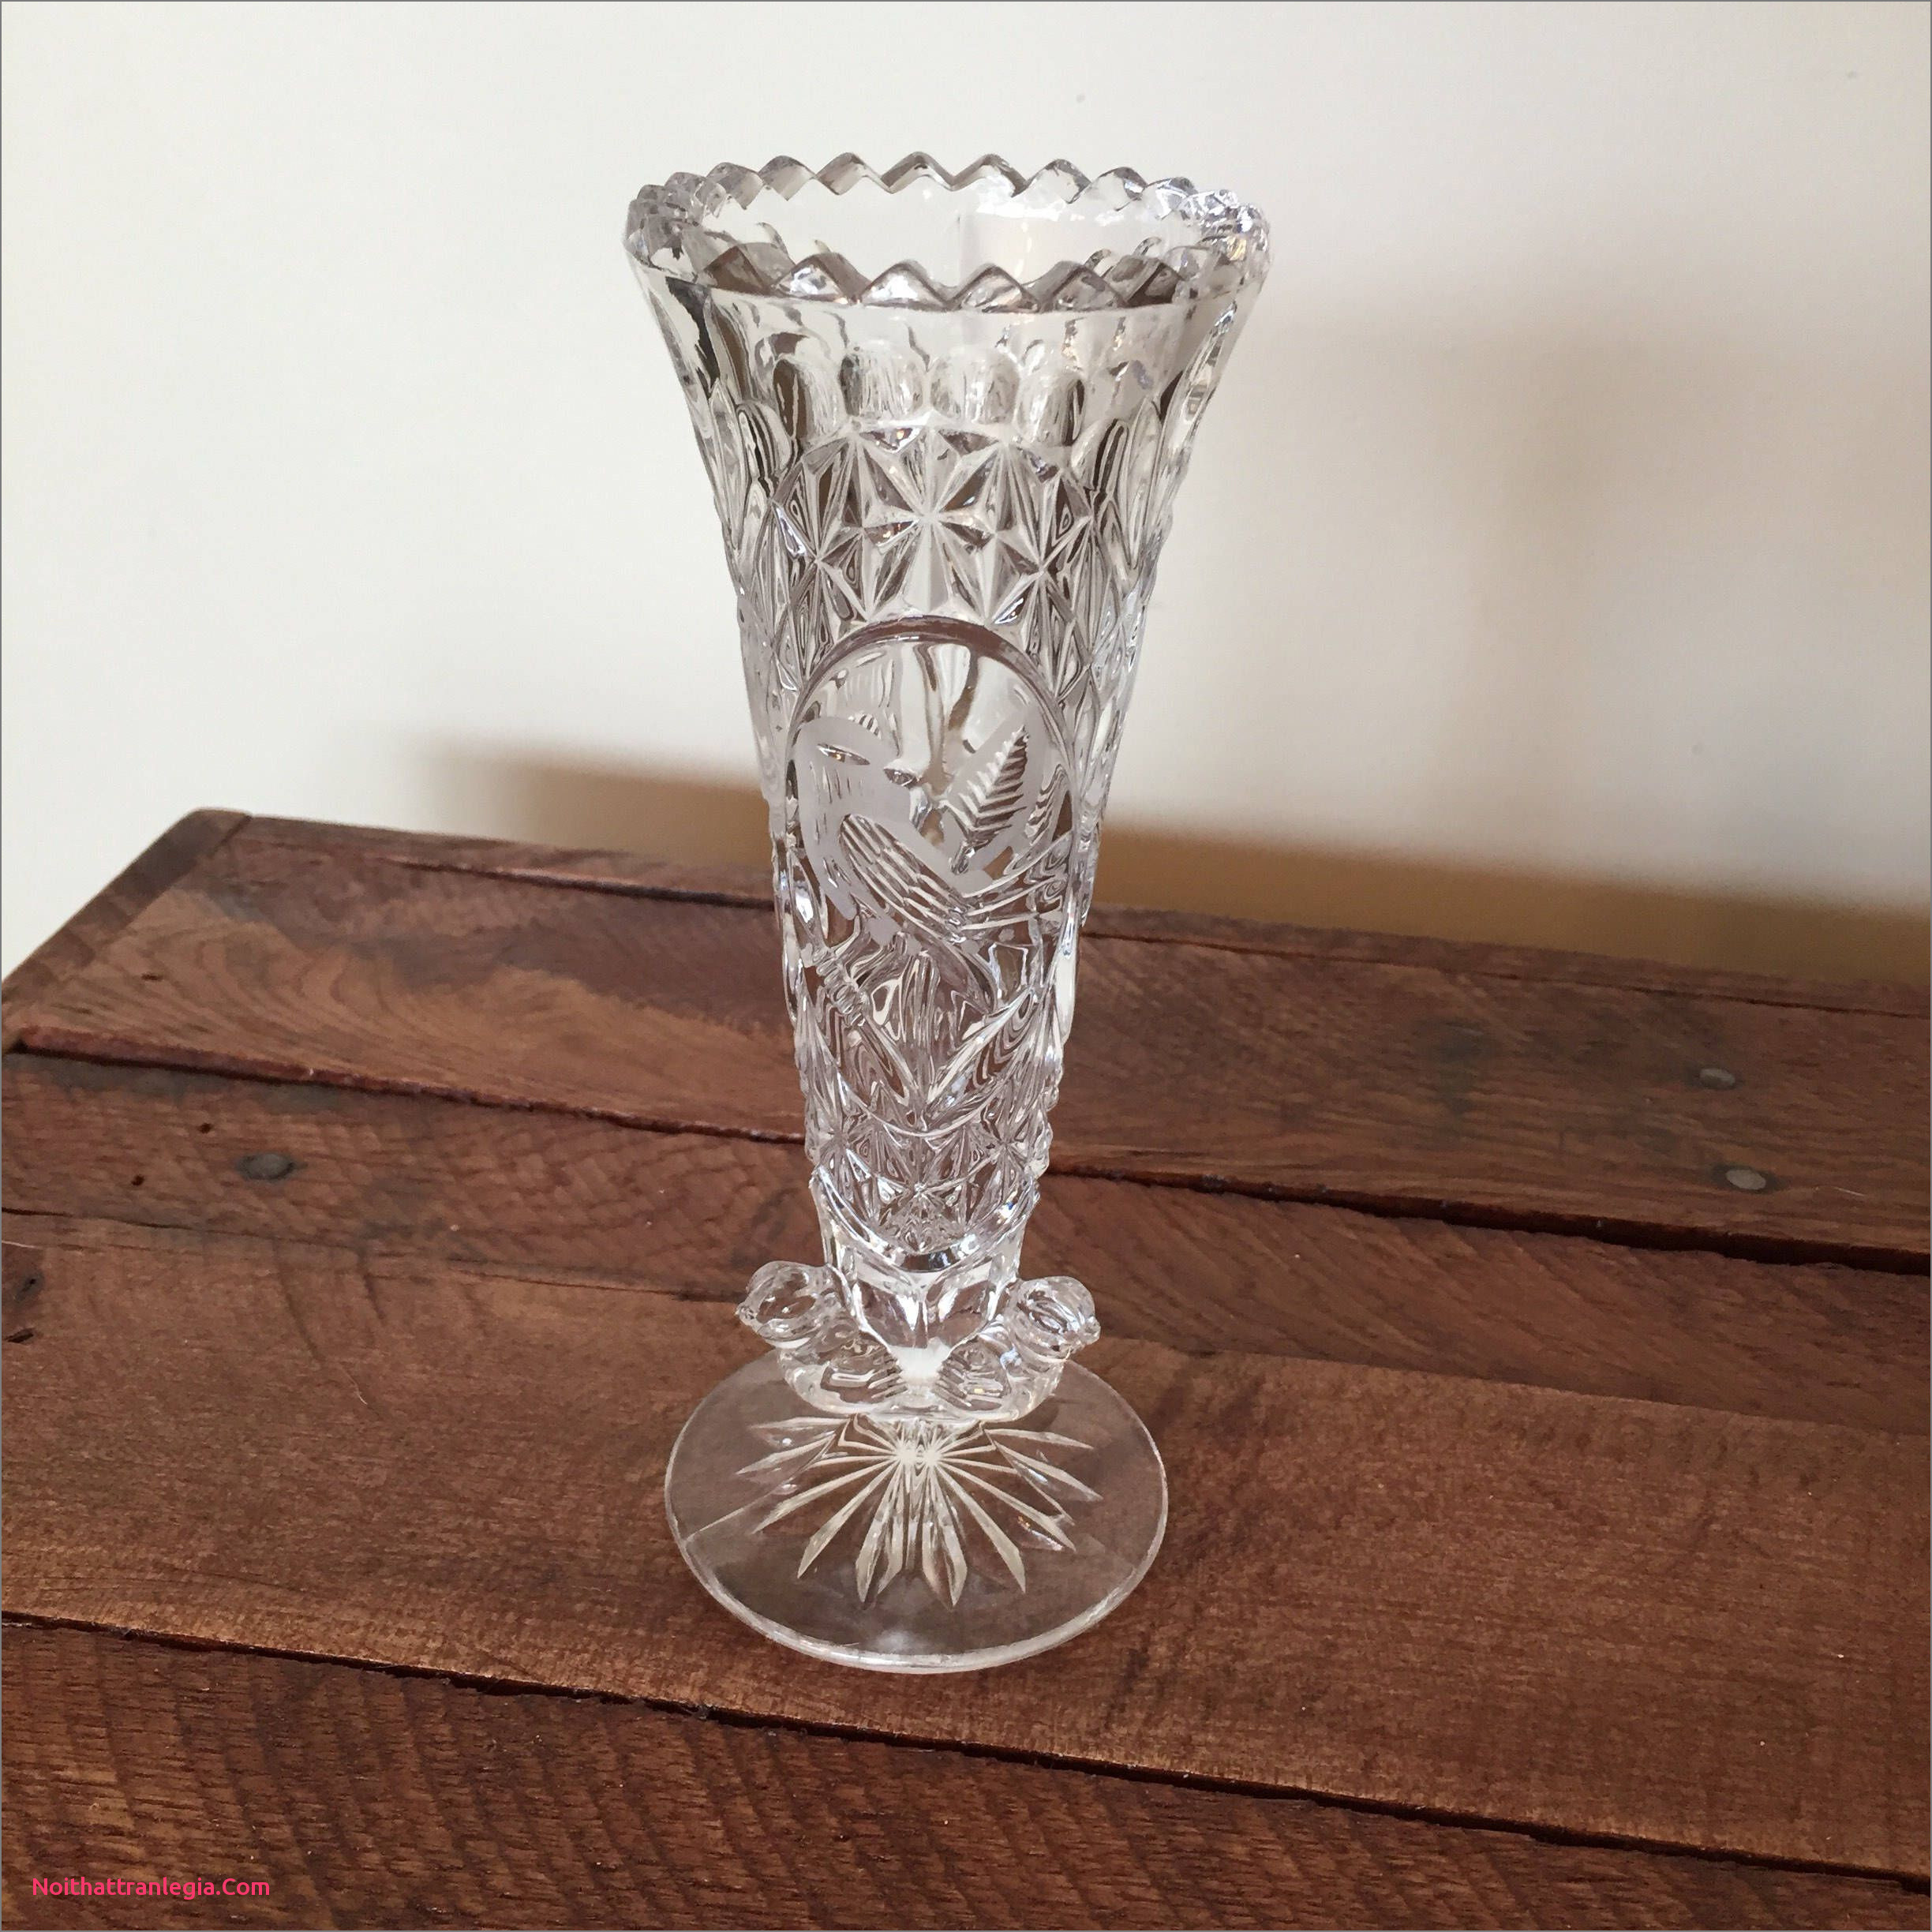 Miniature Glass Flower Vases Of 20 Cut Glass Antique Vase Noithattranlegia Vases Design Throughout Vintage Cut Glass Bird Vase Etched Glass Vase Three Glass Birds Perched On Vase Crystal Bird